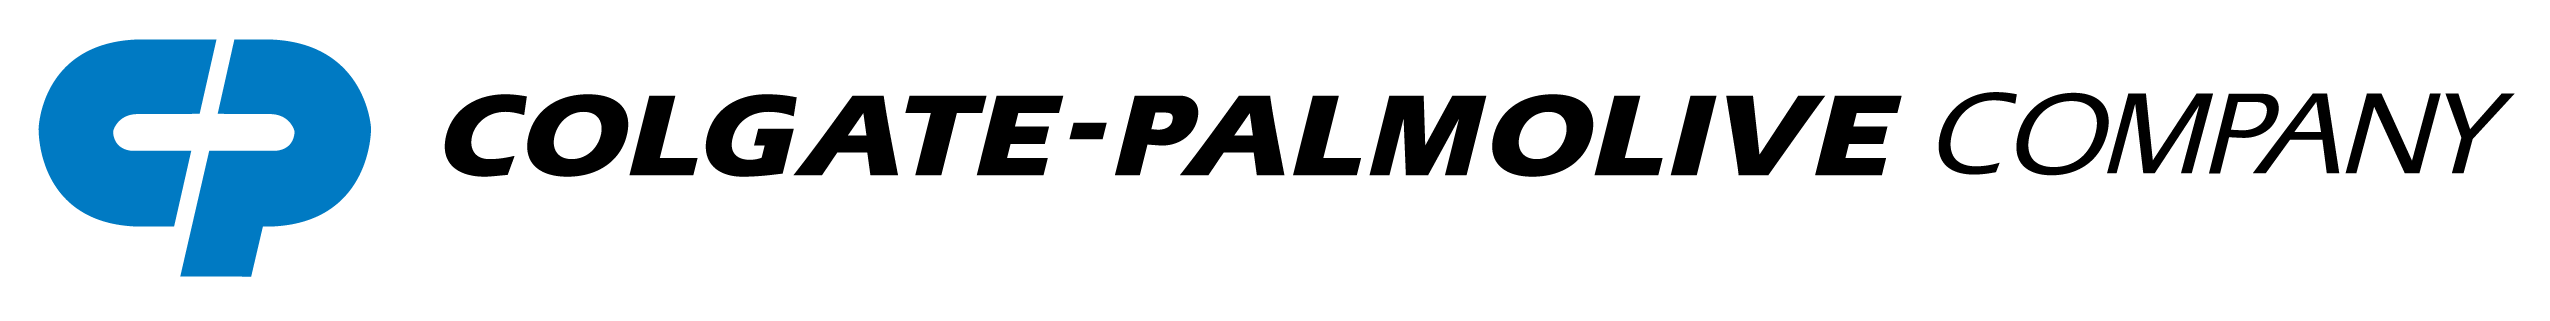 Colgate-Palmolive logo